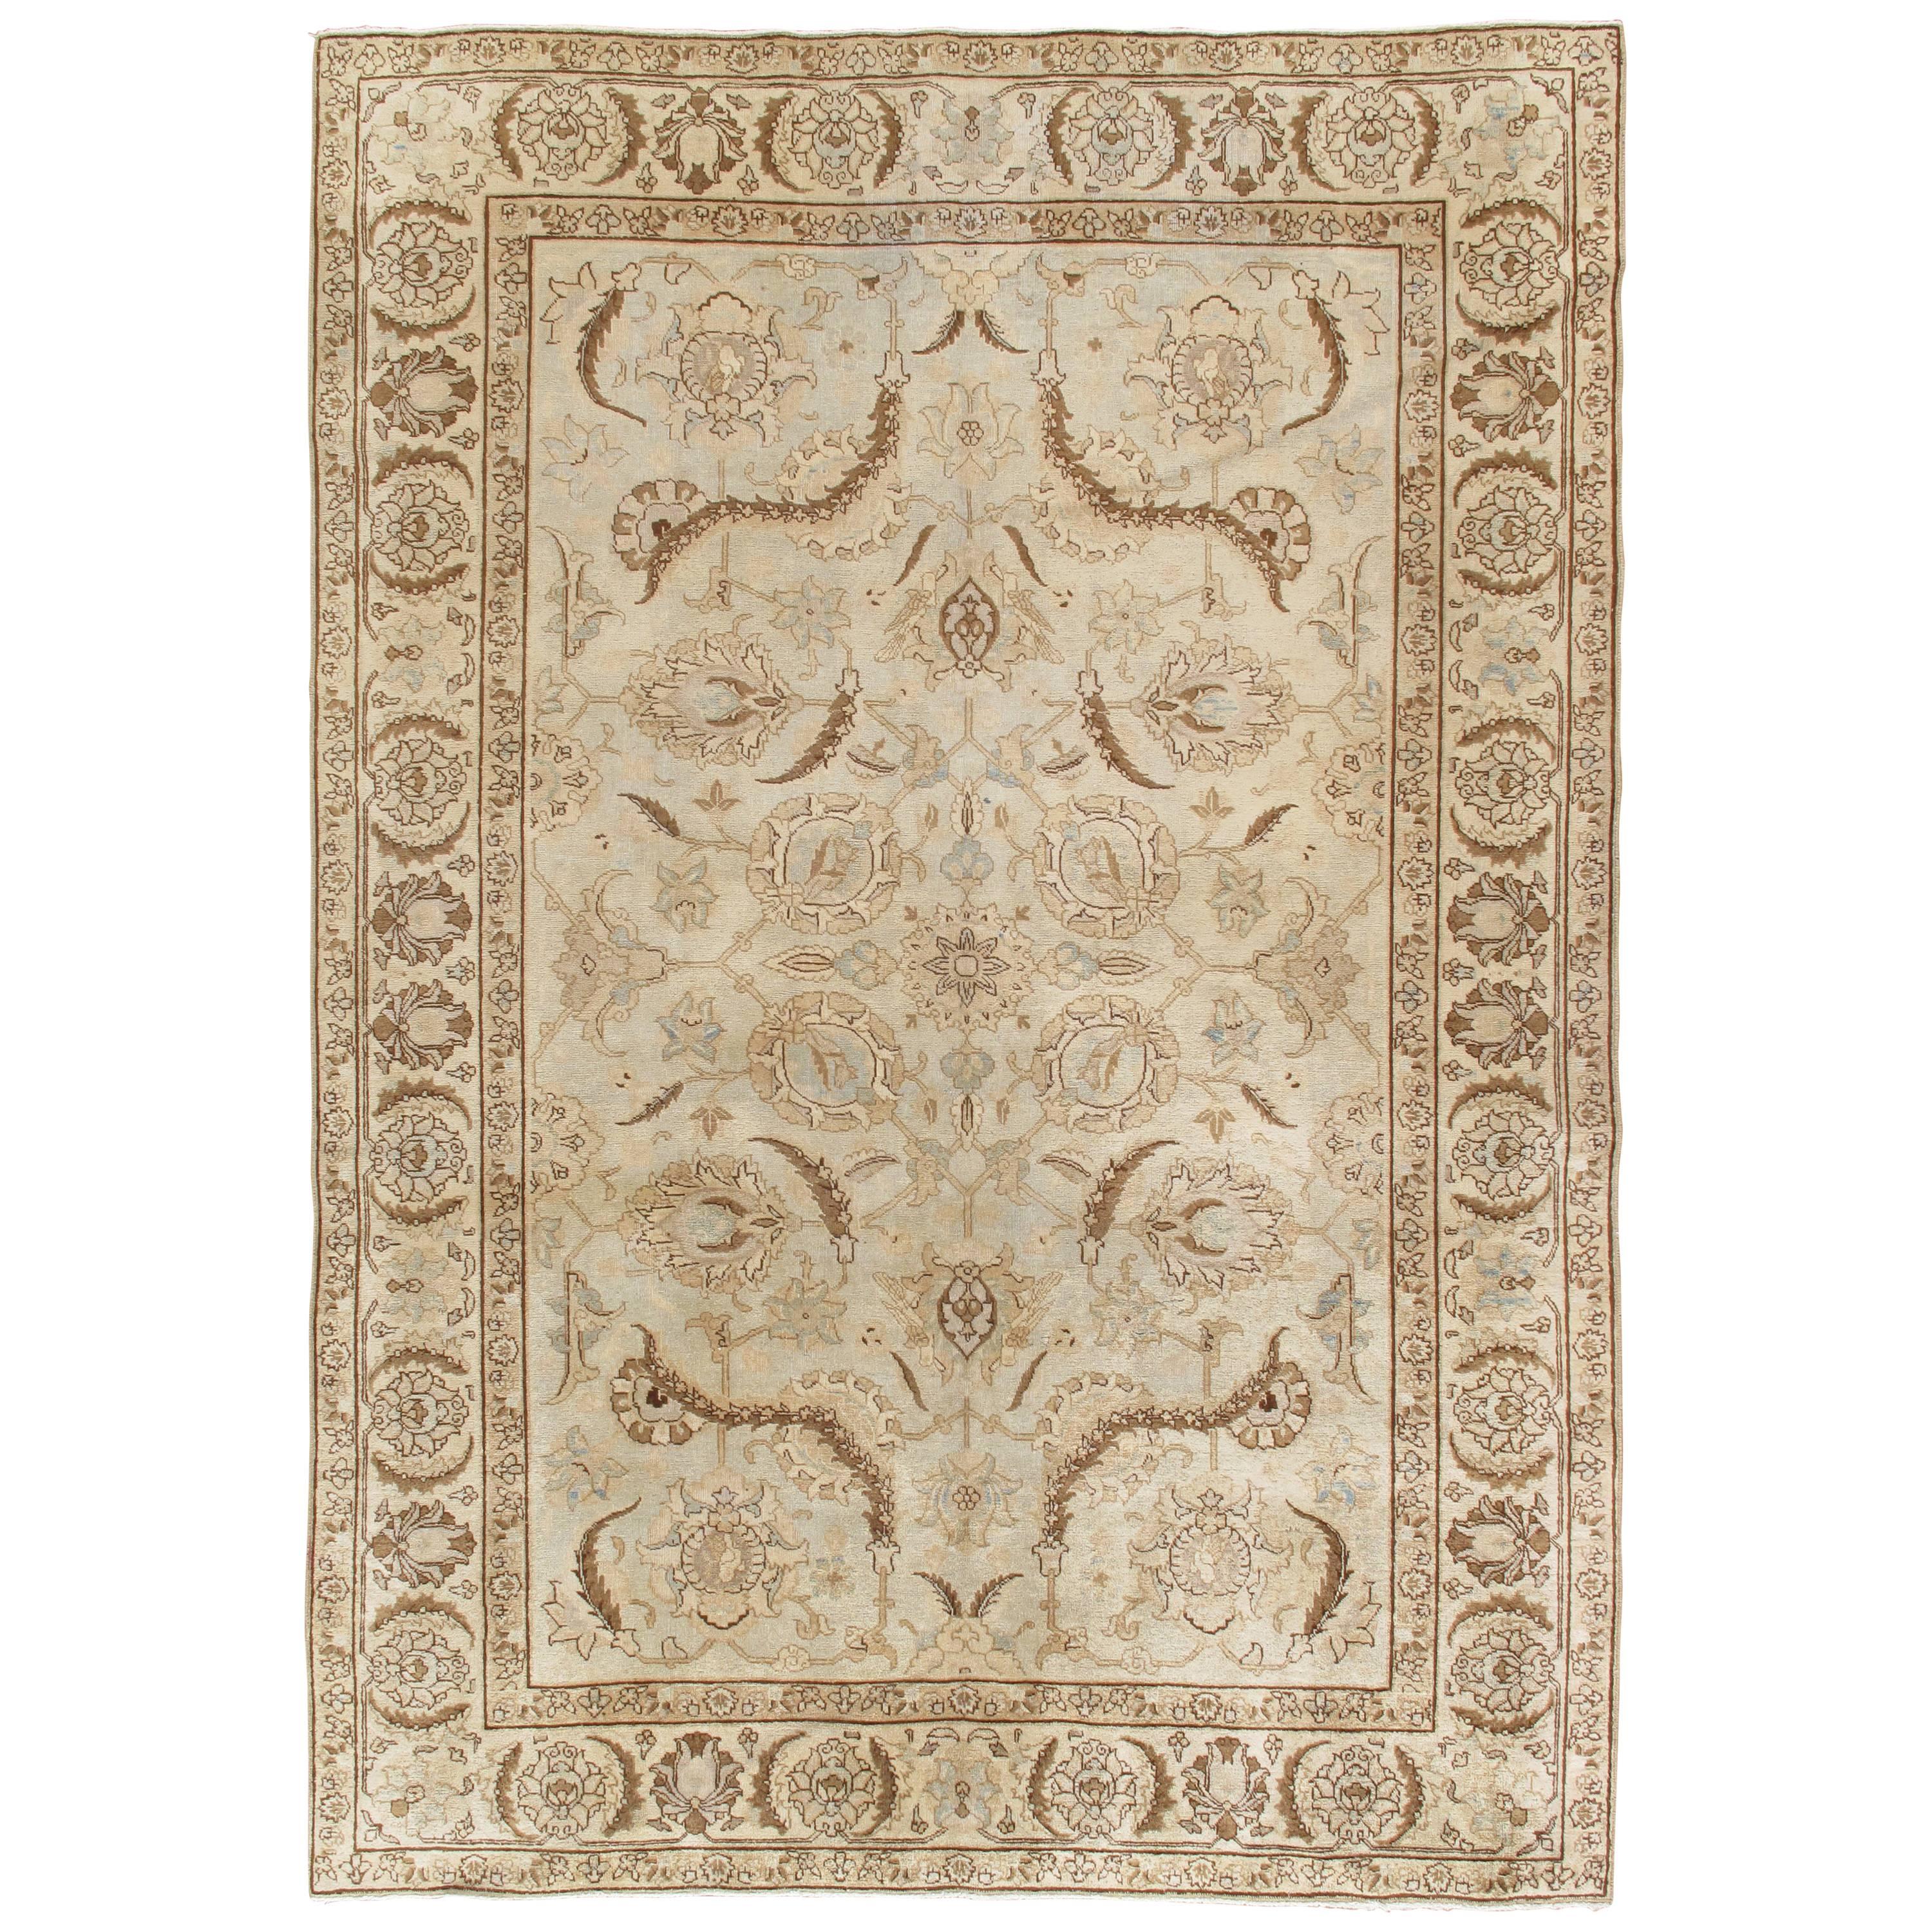 Antique Tabriz Carpet, Fine Handmade Oriental Rug, Pale Blue, Taupe, Brown